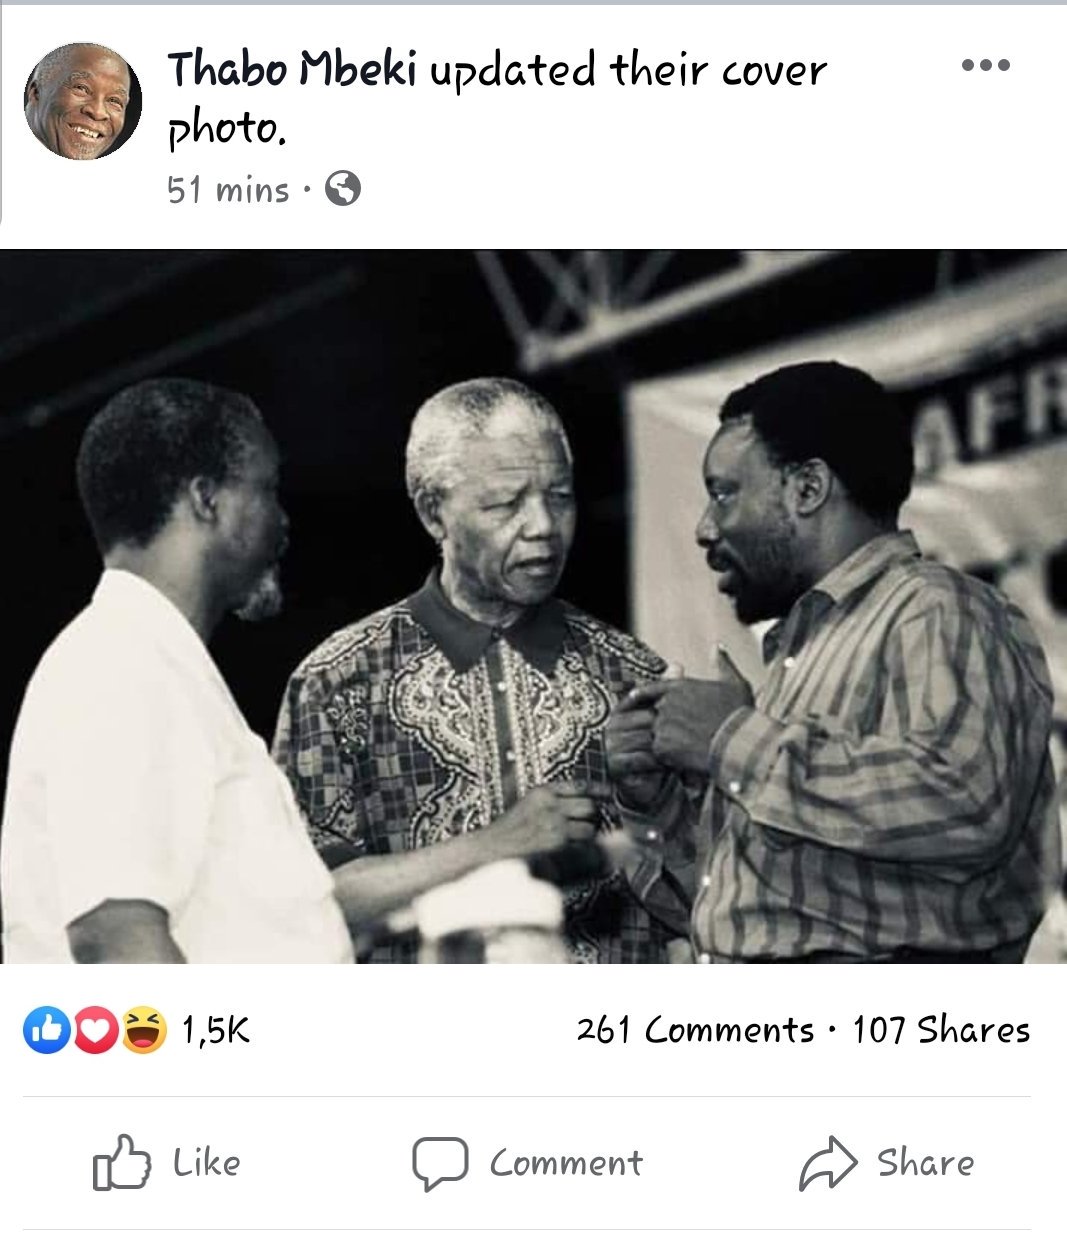 Happy birthday cde Thabo Mbeki! Long may you live! My President! 